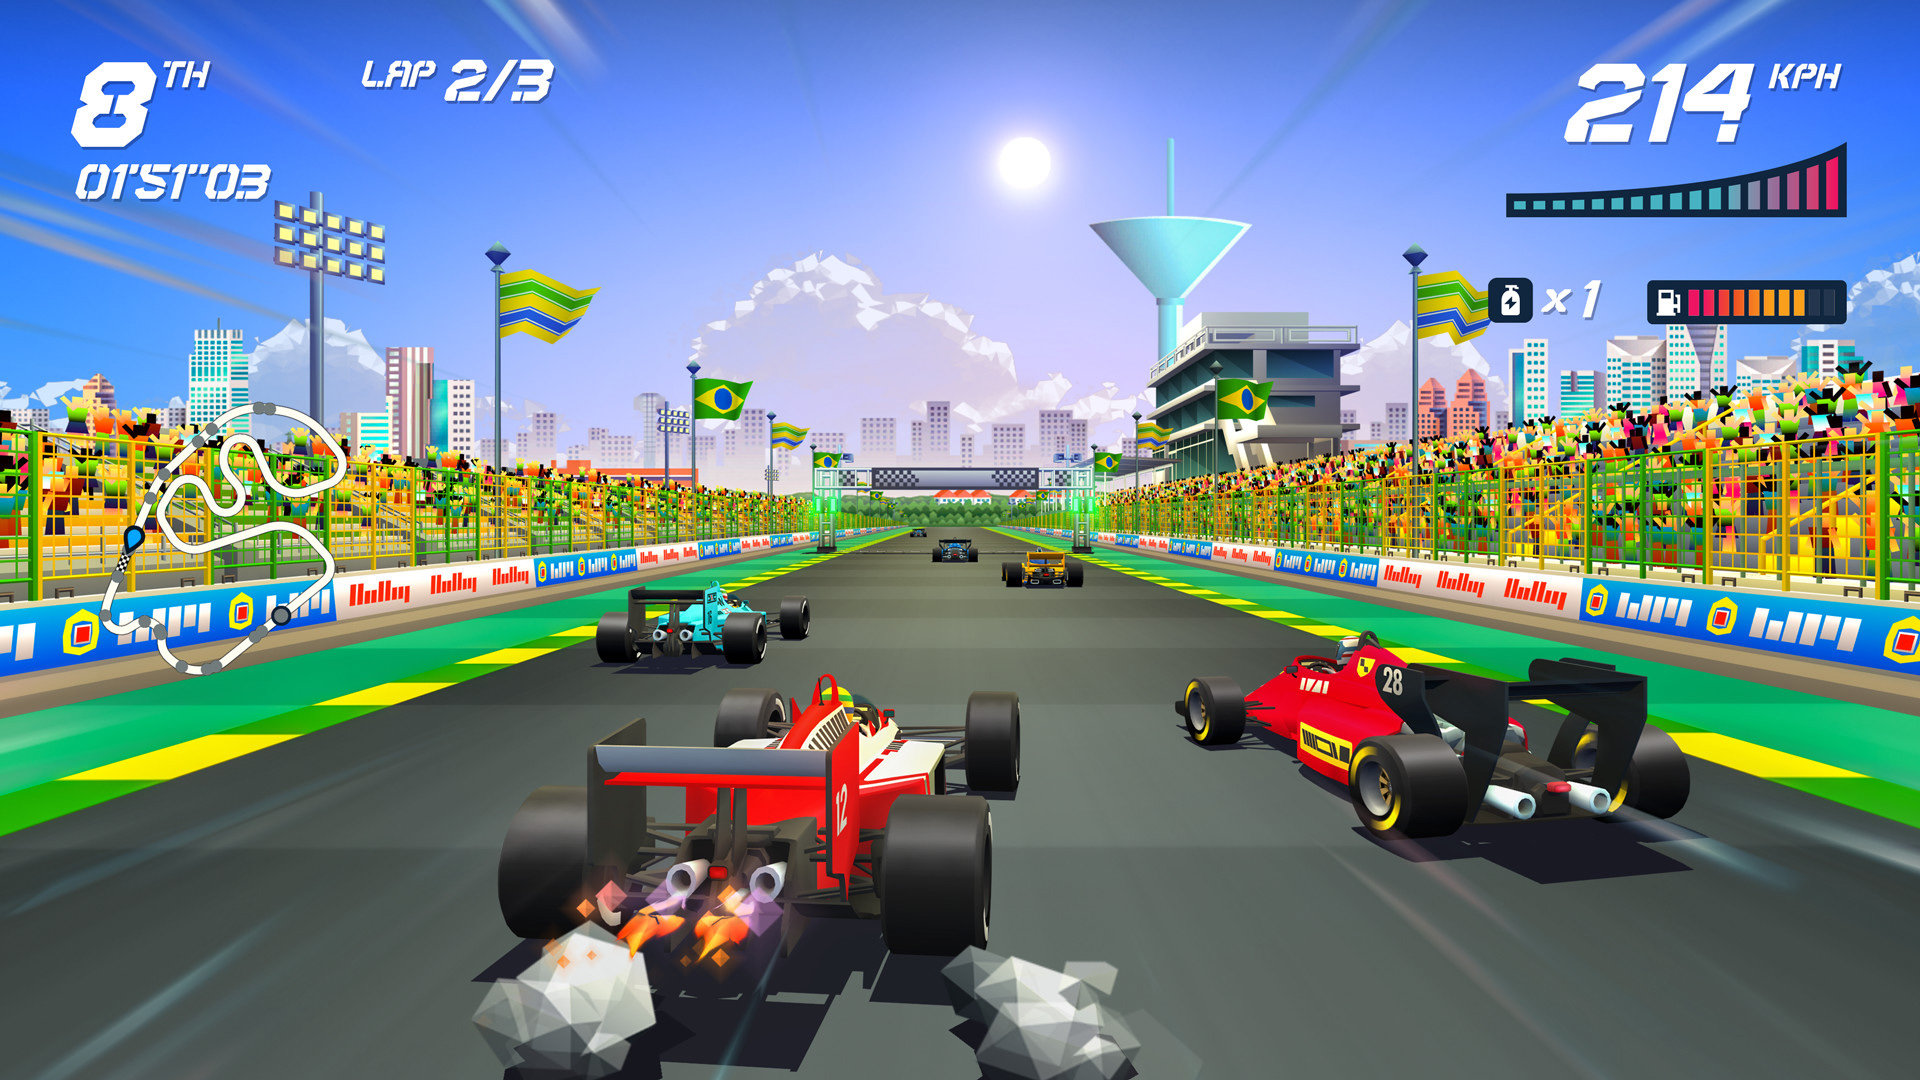 Jogo Horizon Chase Turbo: Senna Sempre para PS4